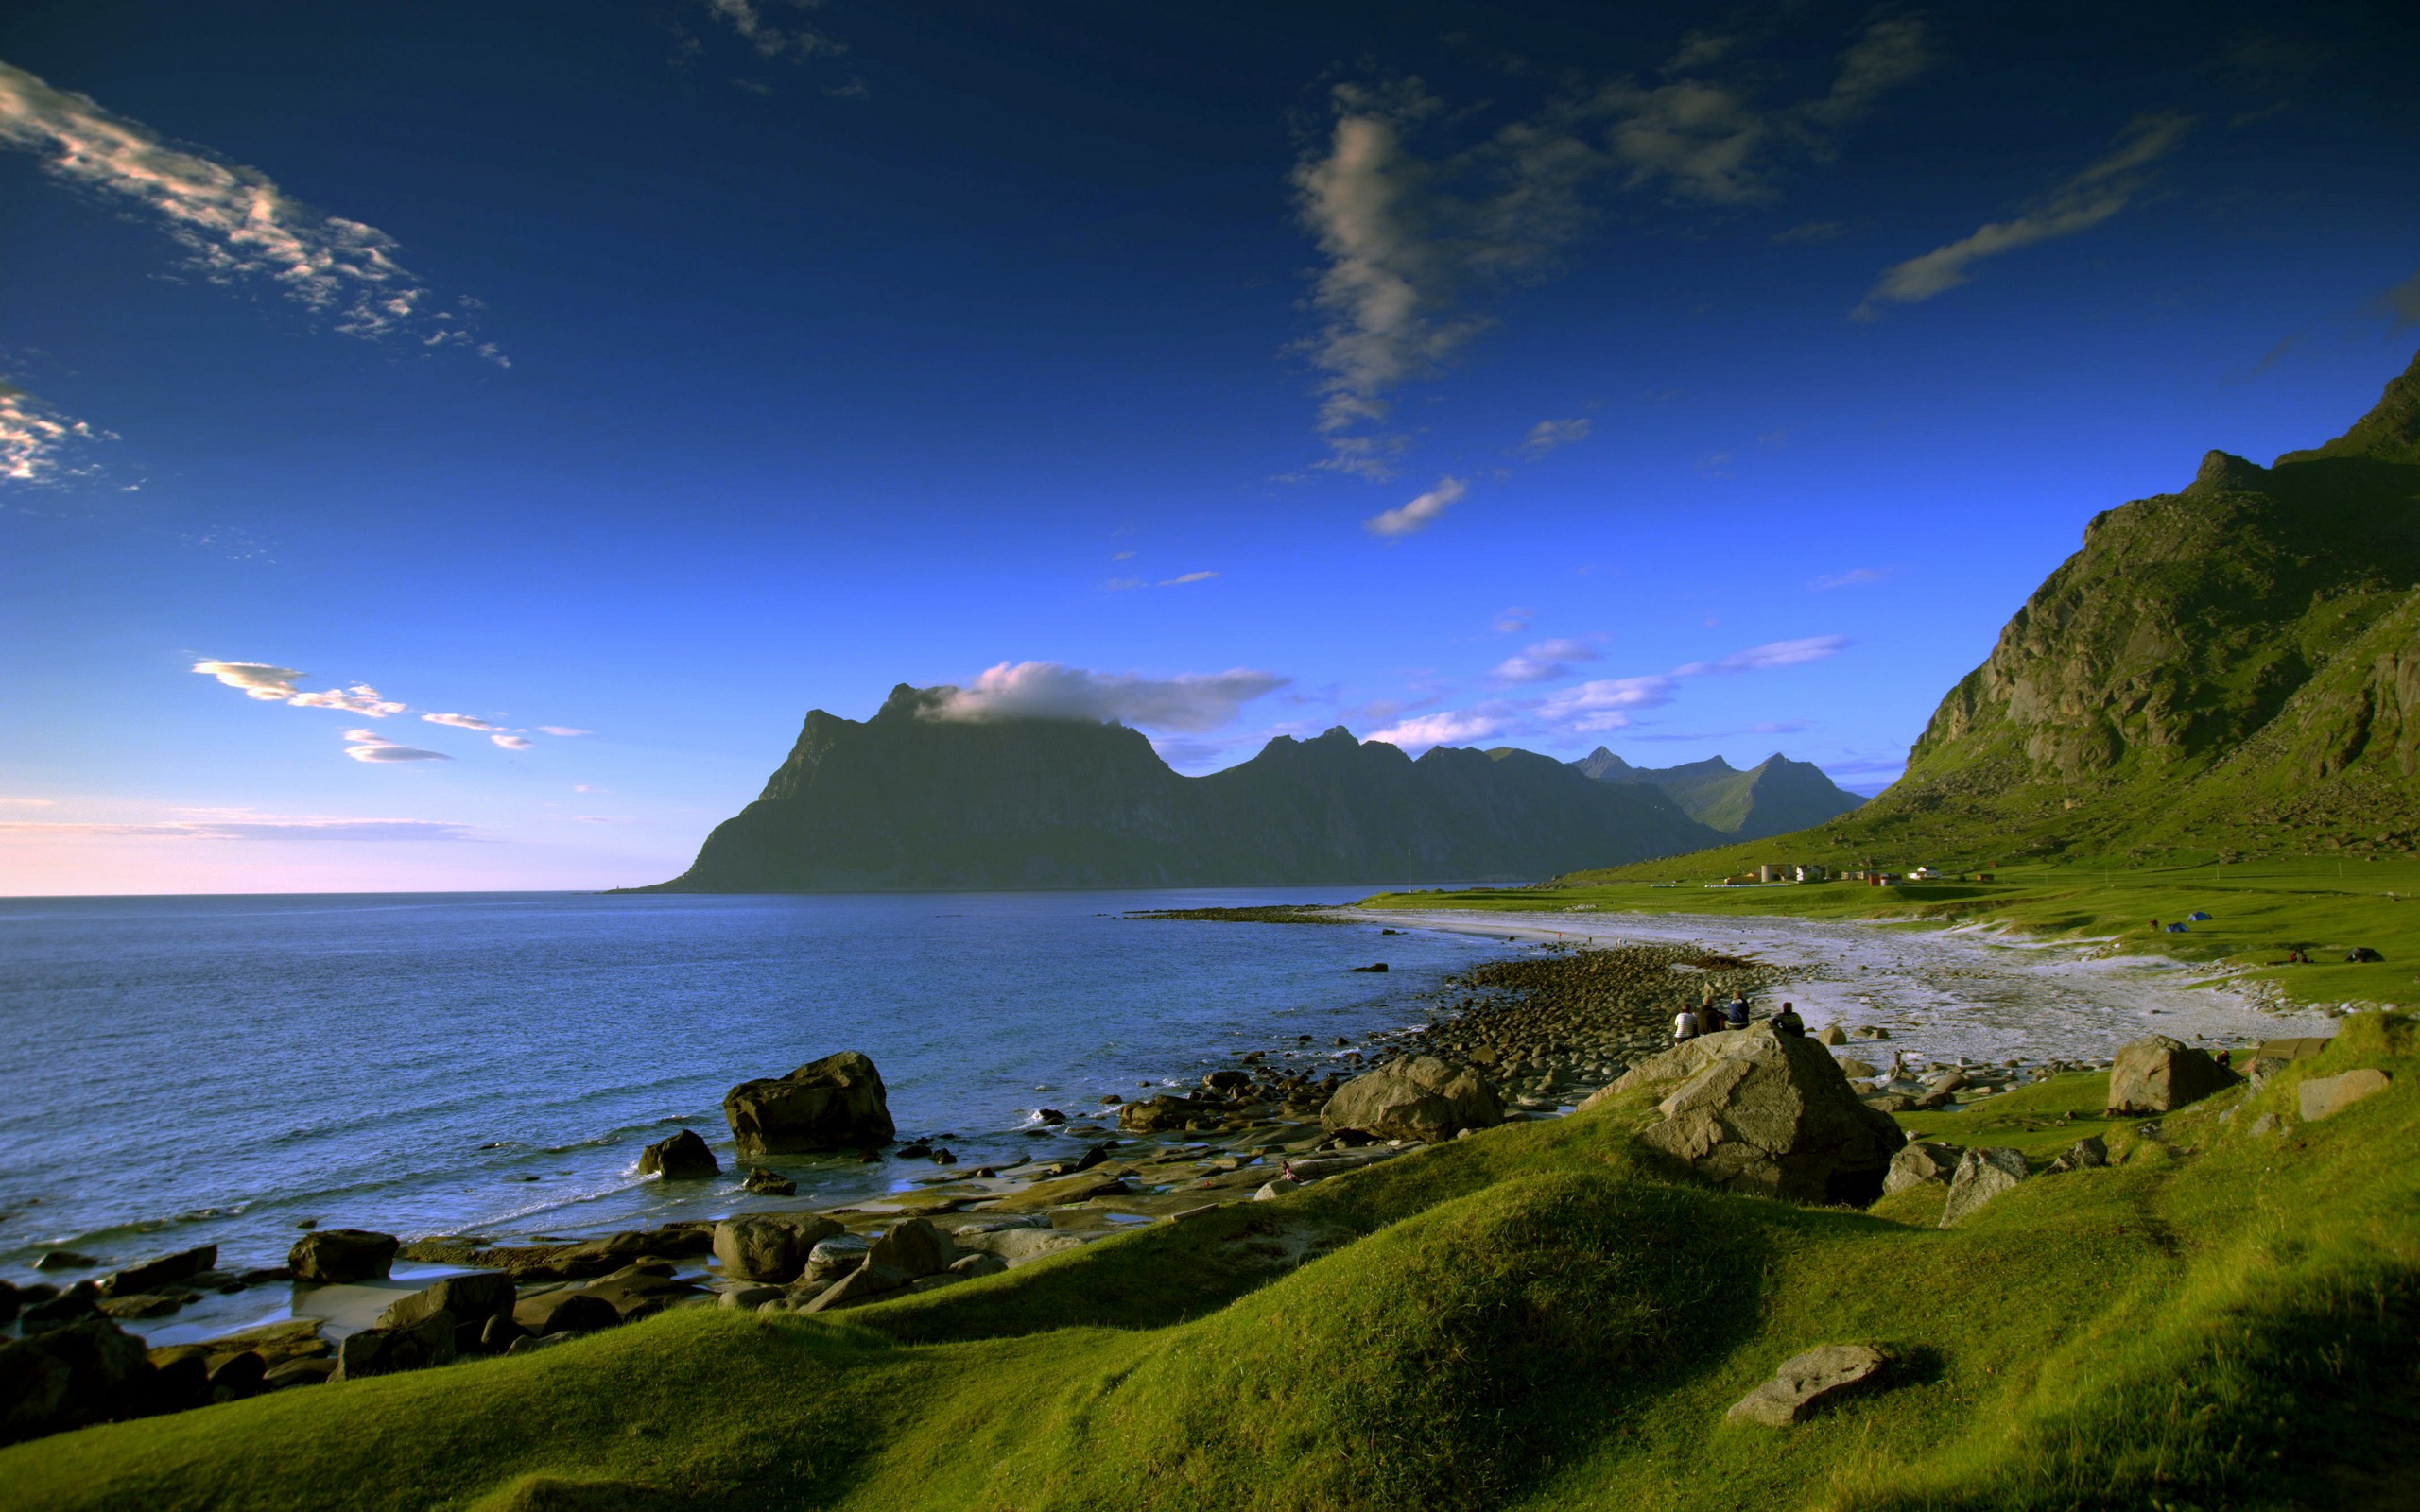 General 2560x1600 Norway beach rocks mountains landscape Lofoten nordic landscapes